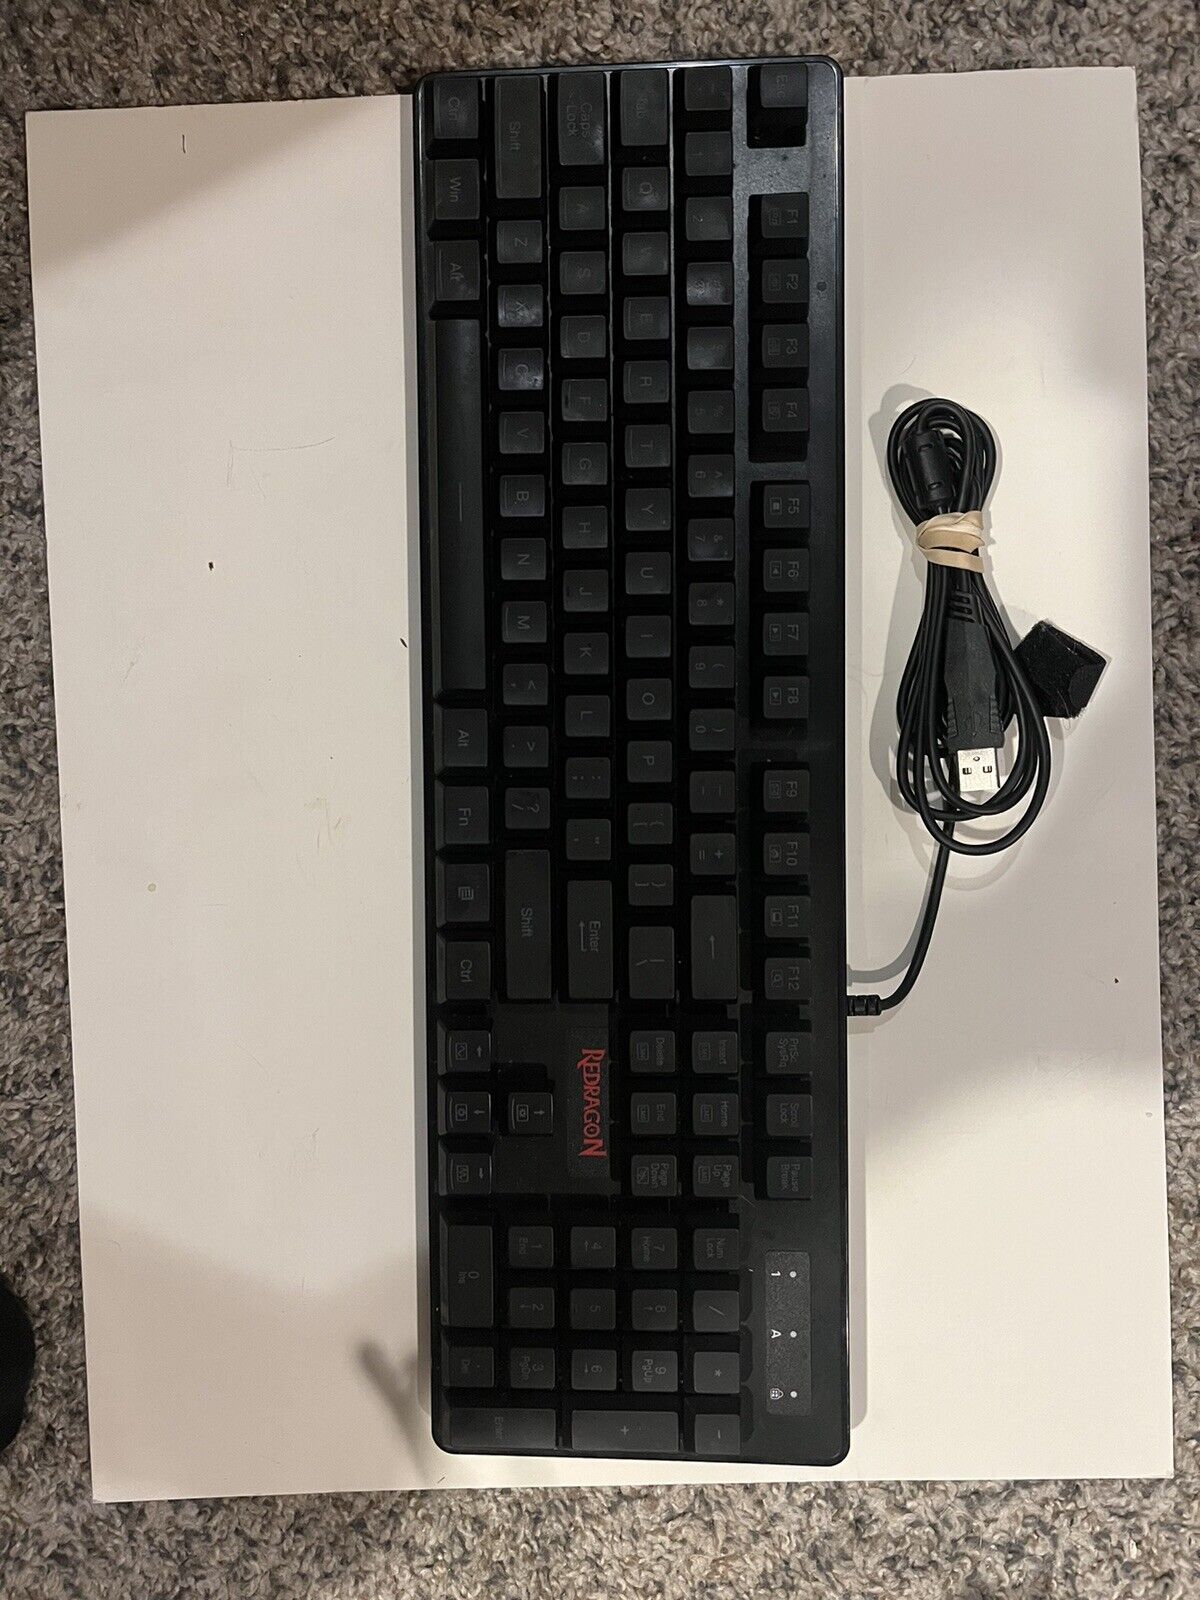 Red Dragon K570 RGB Keyboard